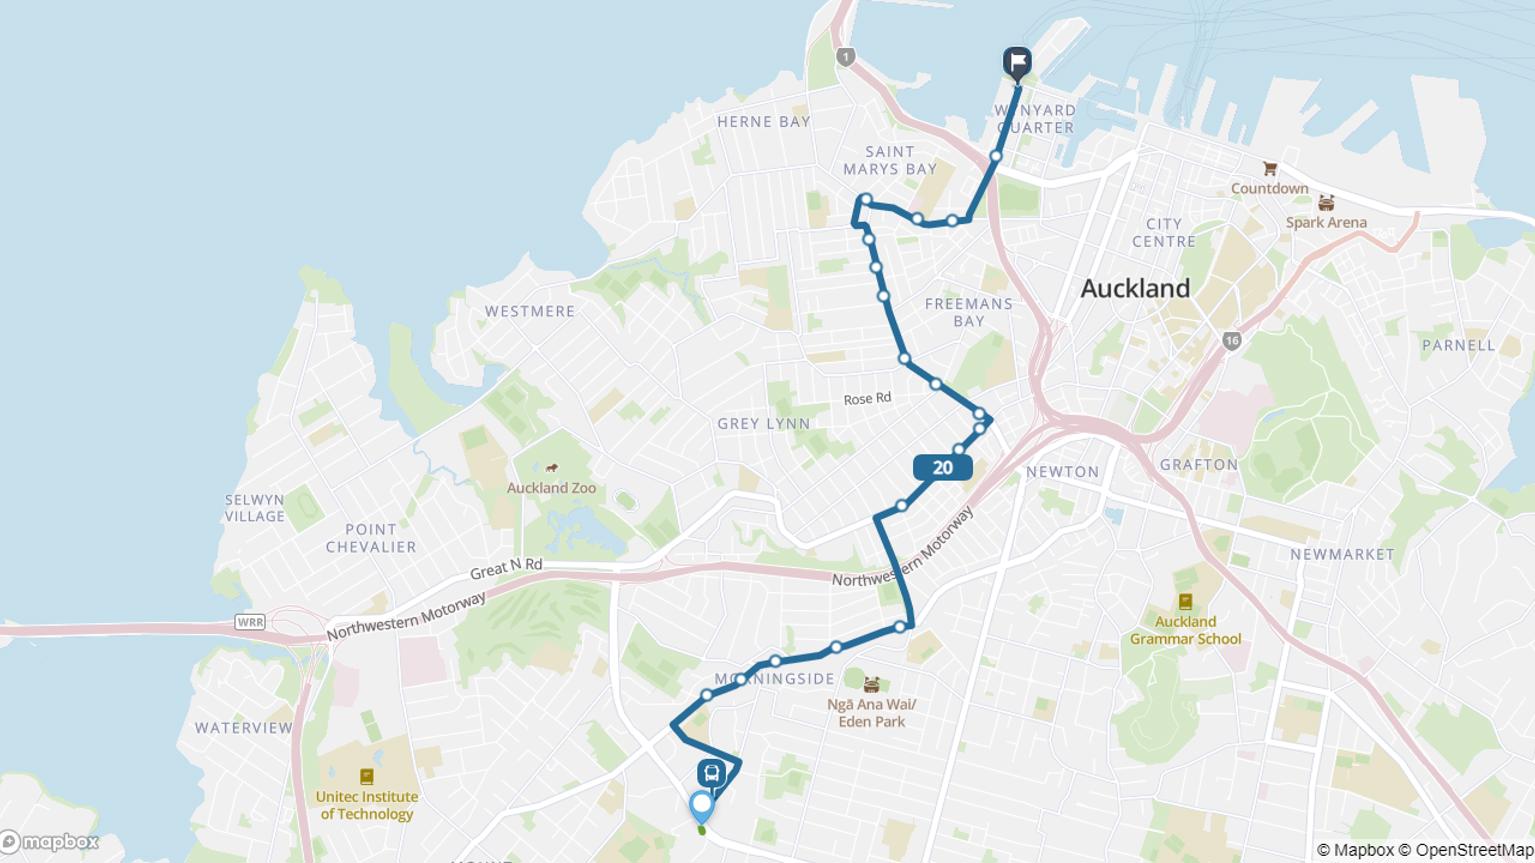 Map of St Lukes to Wynyard Quarter bus journey